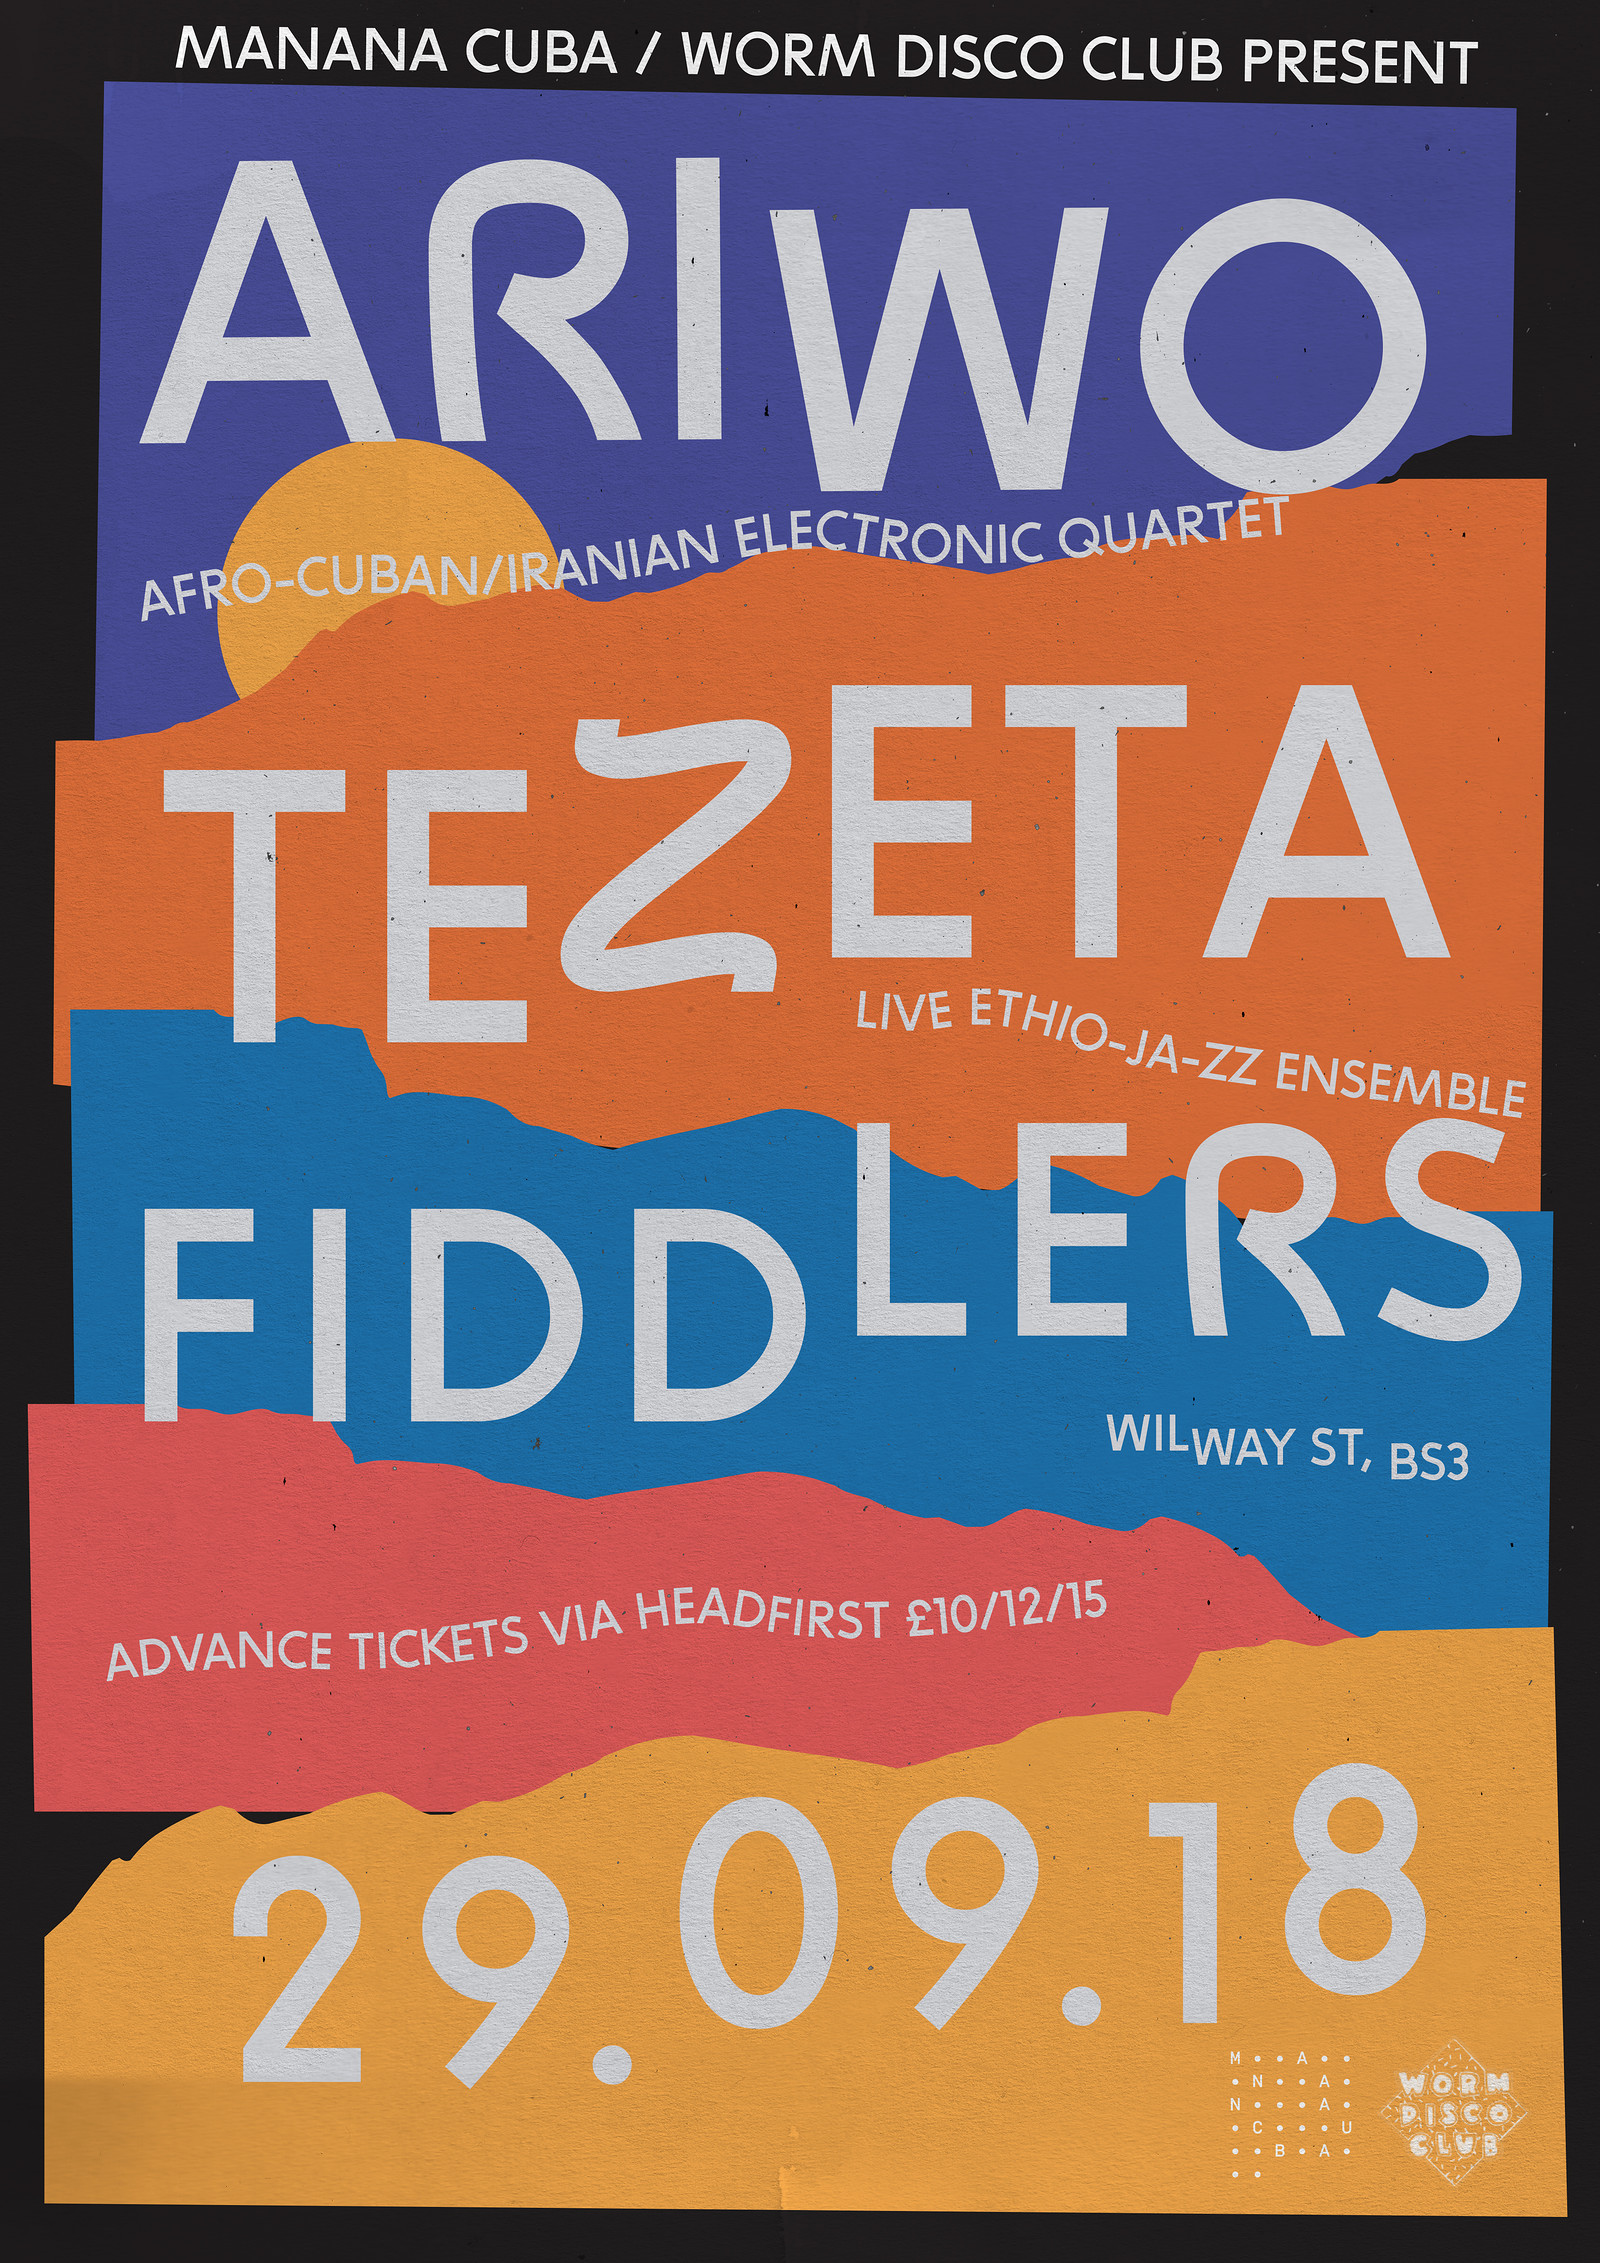 Ariwo & Tezeta at Fiddlers